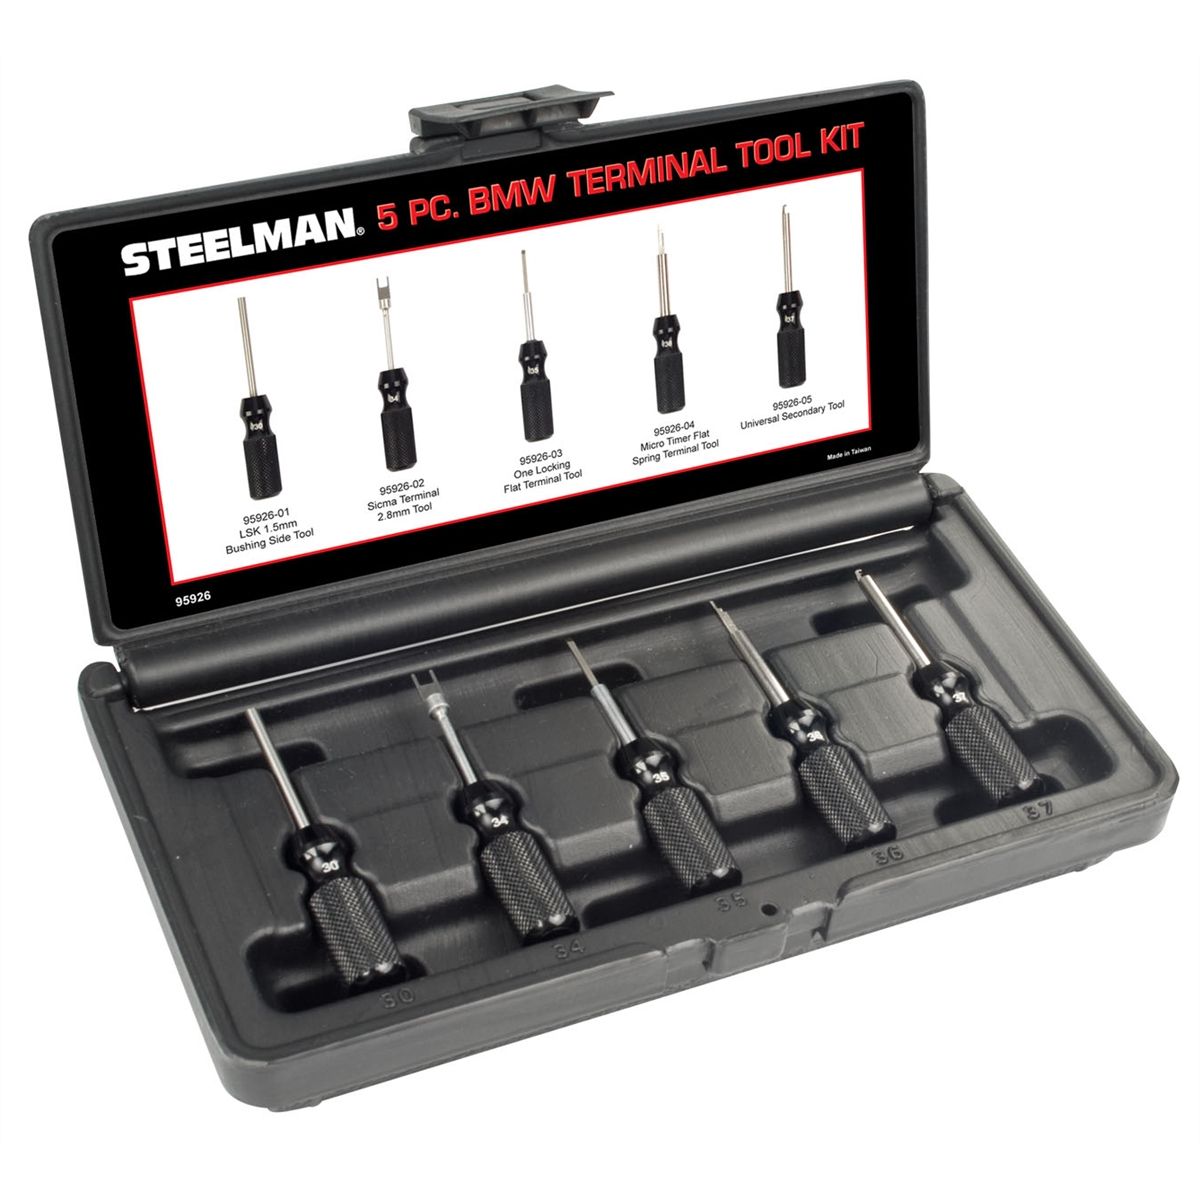 STEELMAN 95928 10-Piece Electrical Terminal Block Release Tool Kit for VW/Audi